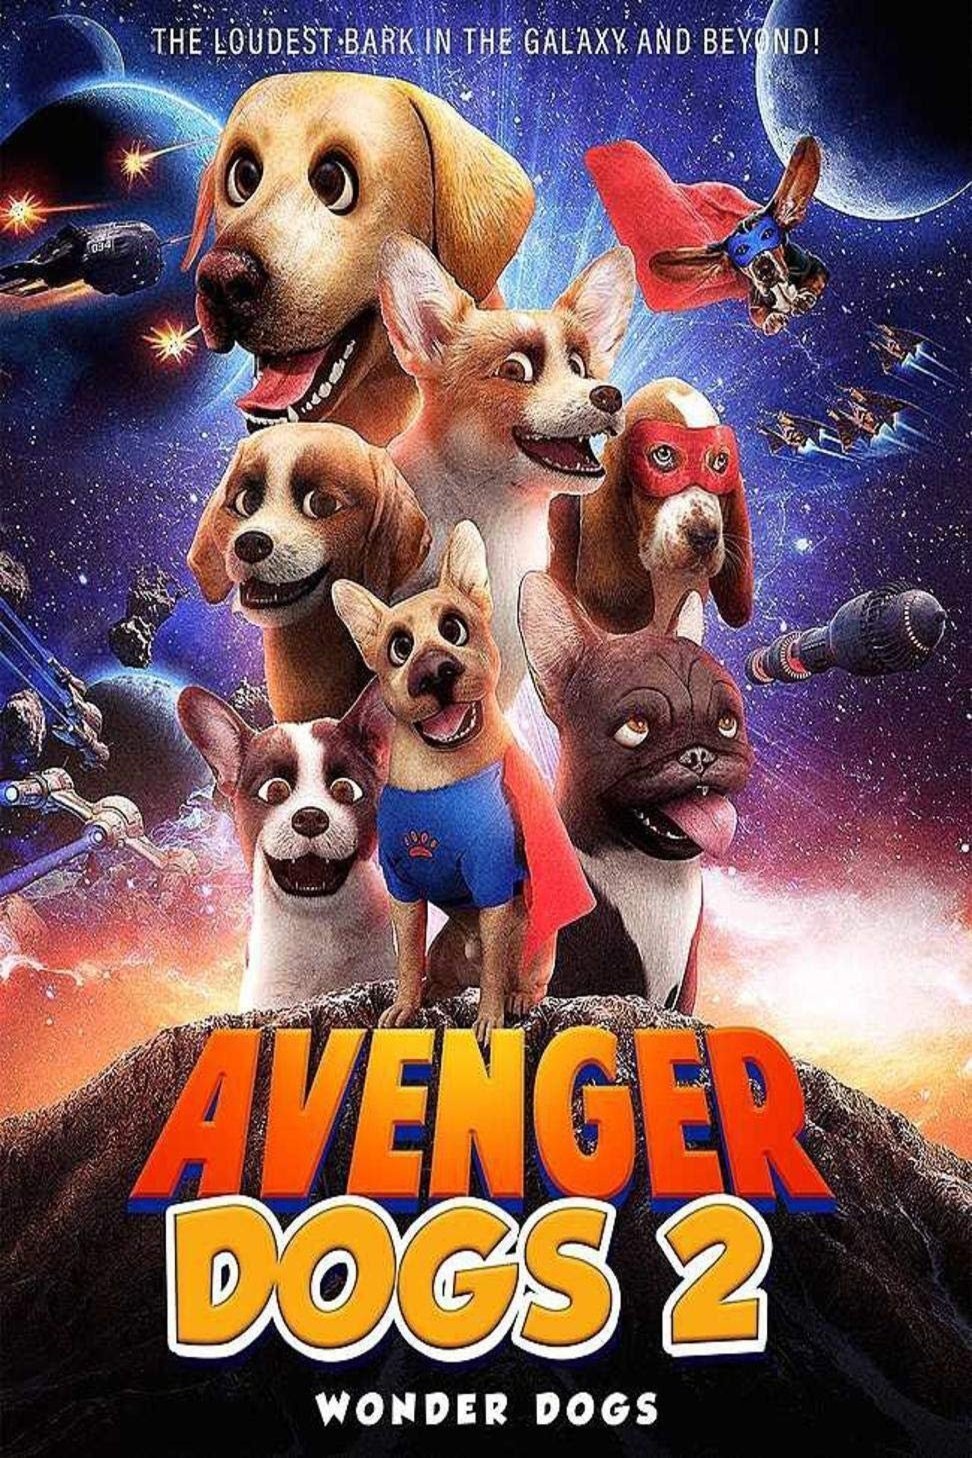 Poster of the movie Avenger Dogs 2: Wonder Dogs